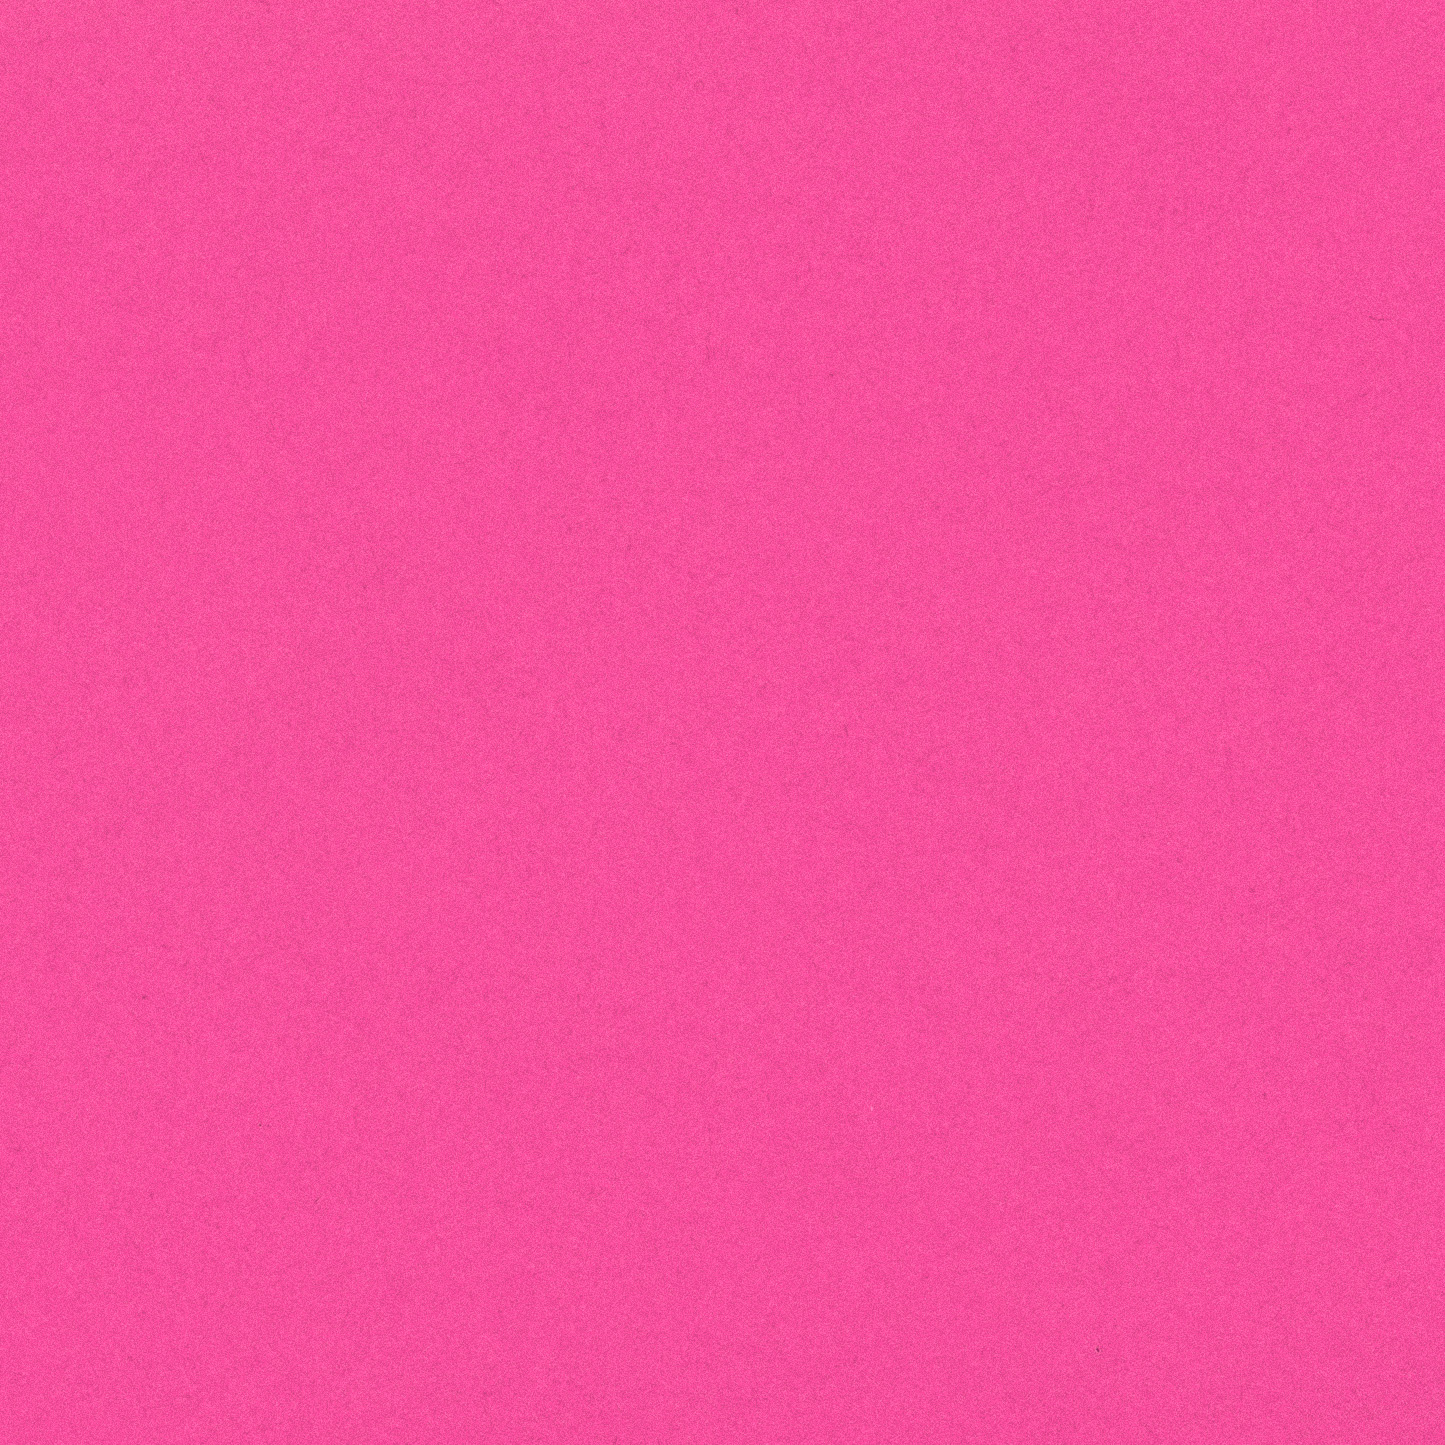 Translucent - Fushia Pink 100gsm